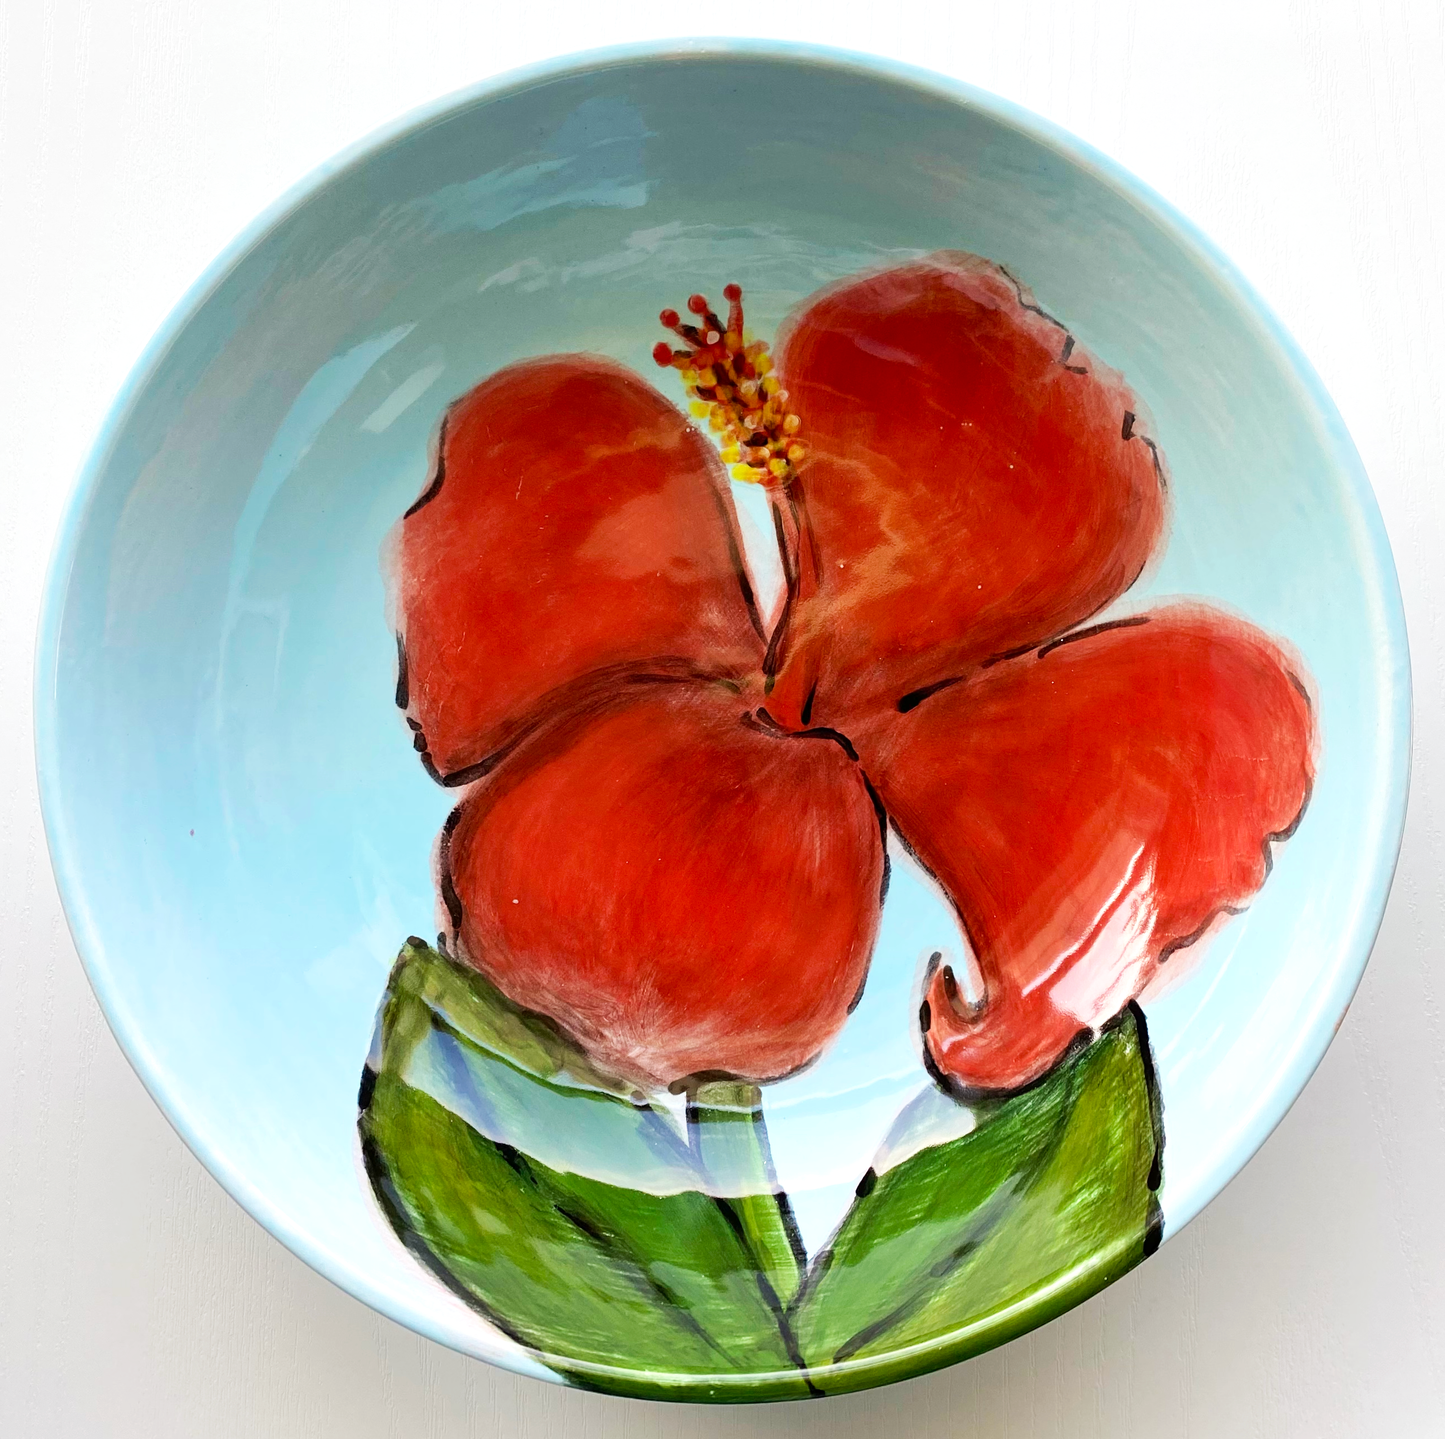 Handmade Ceramic Tropical Toucan Dinner Plate and Bowl, Set of 2